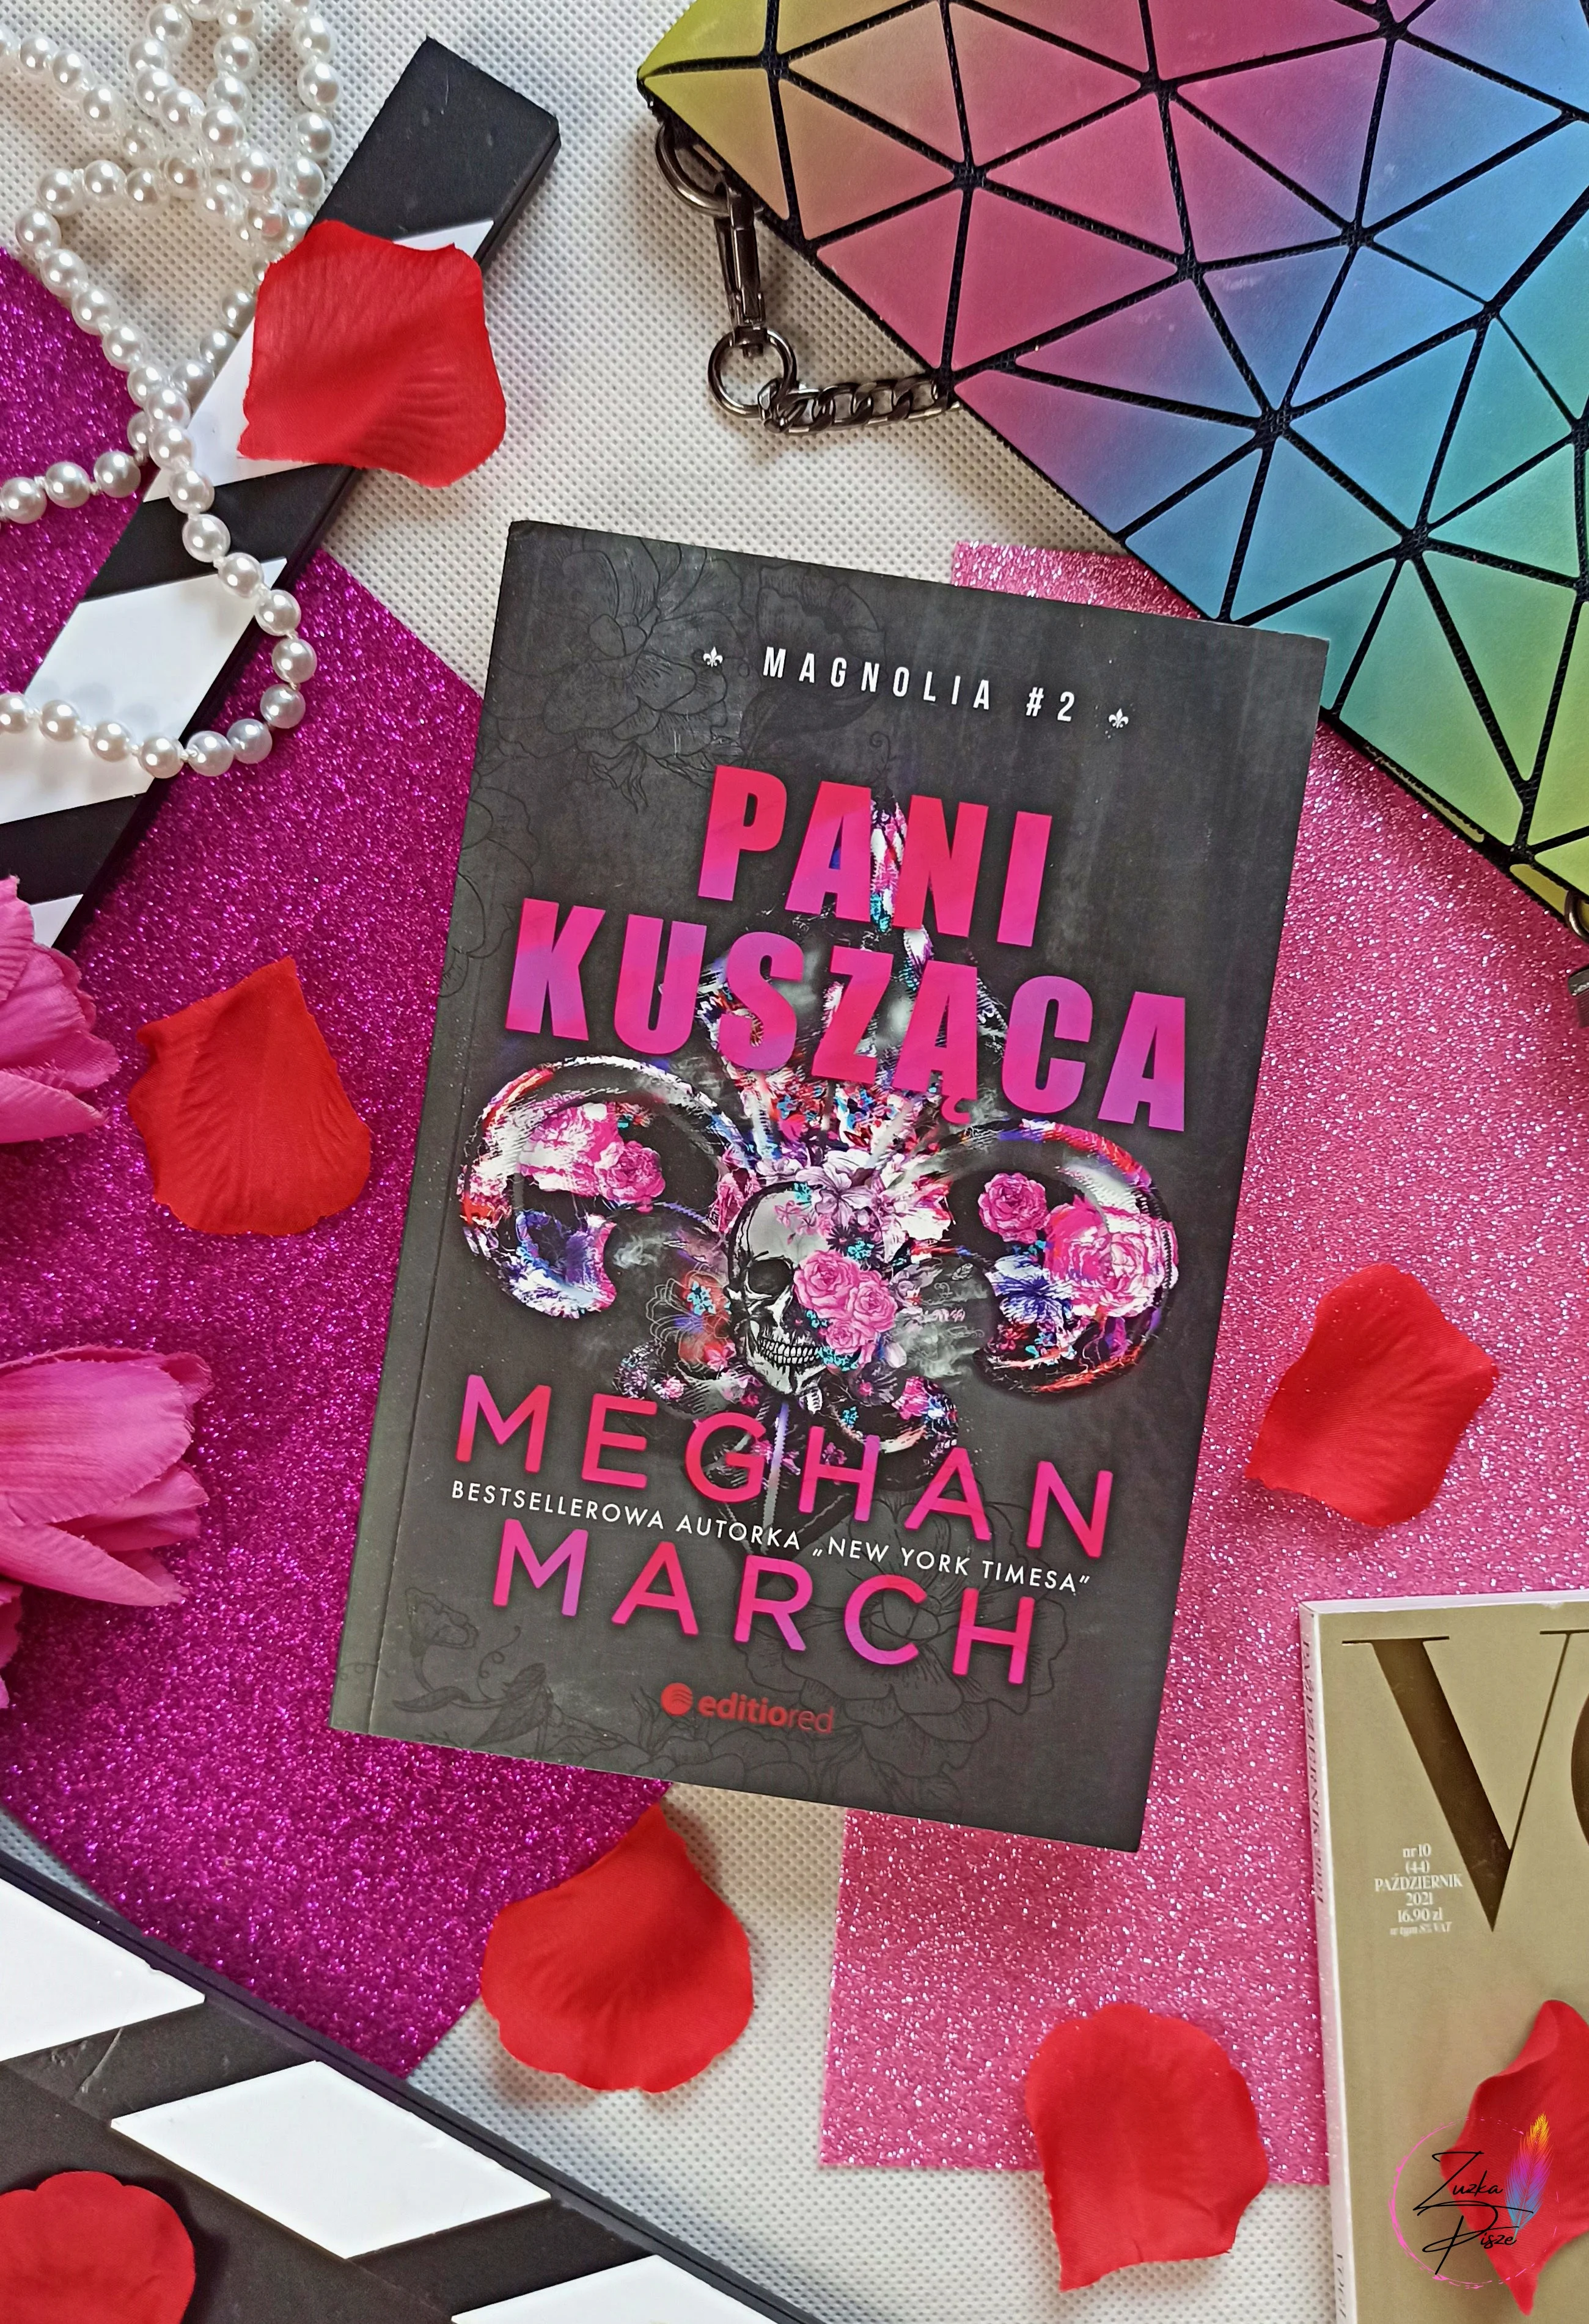 Meghan March "Pani Kusząca" - recenzja książki